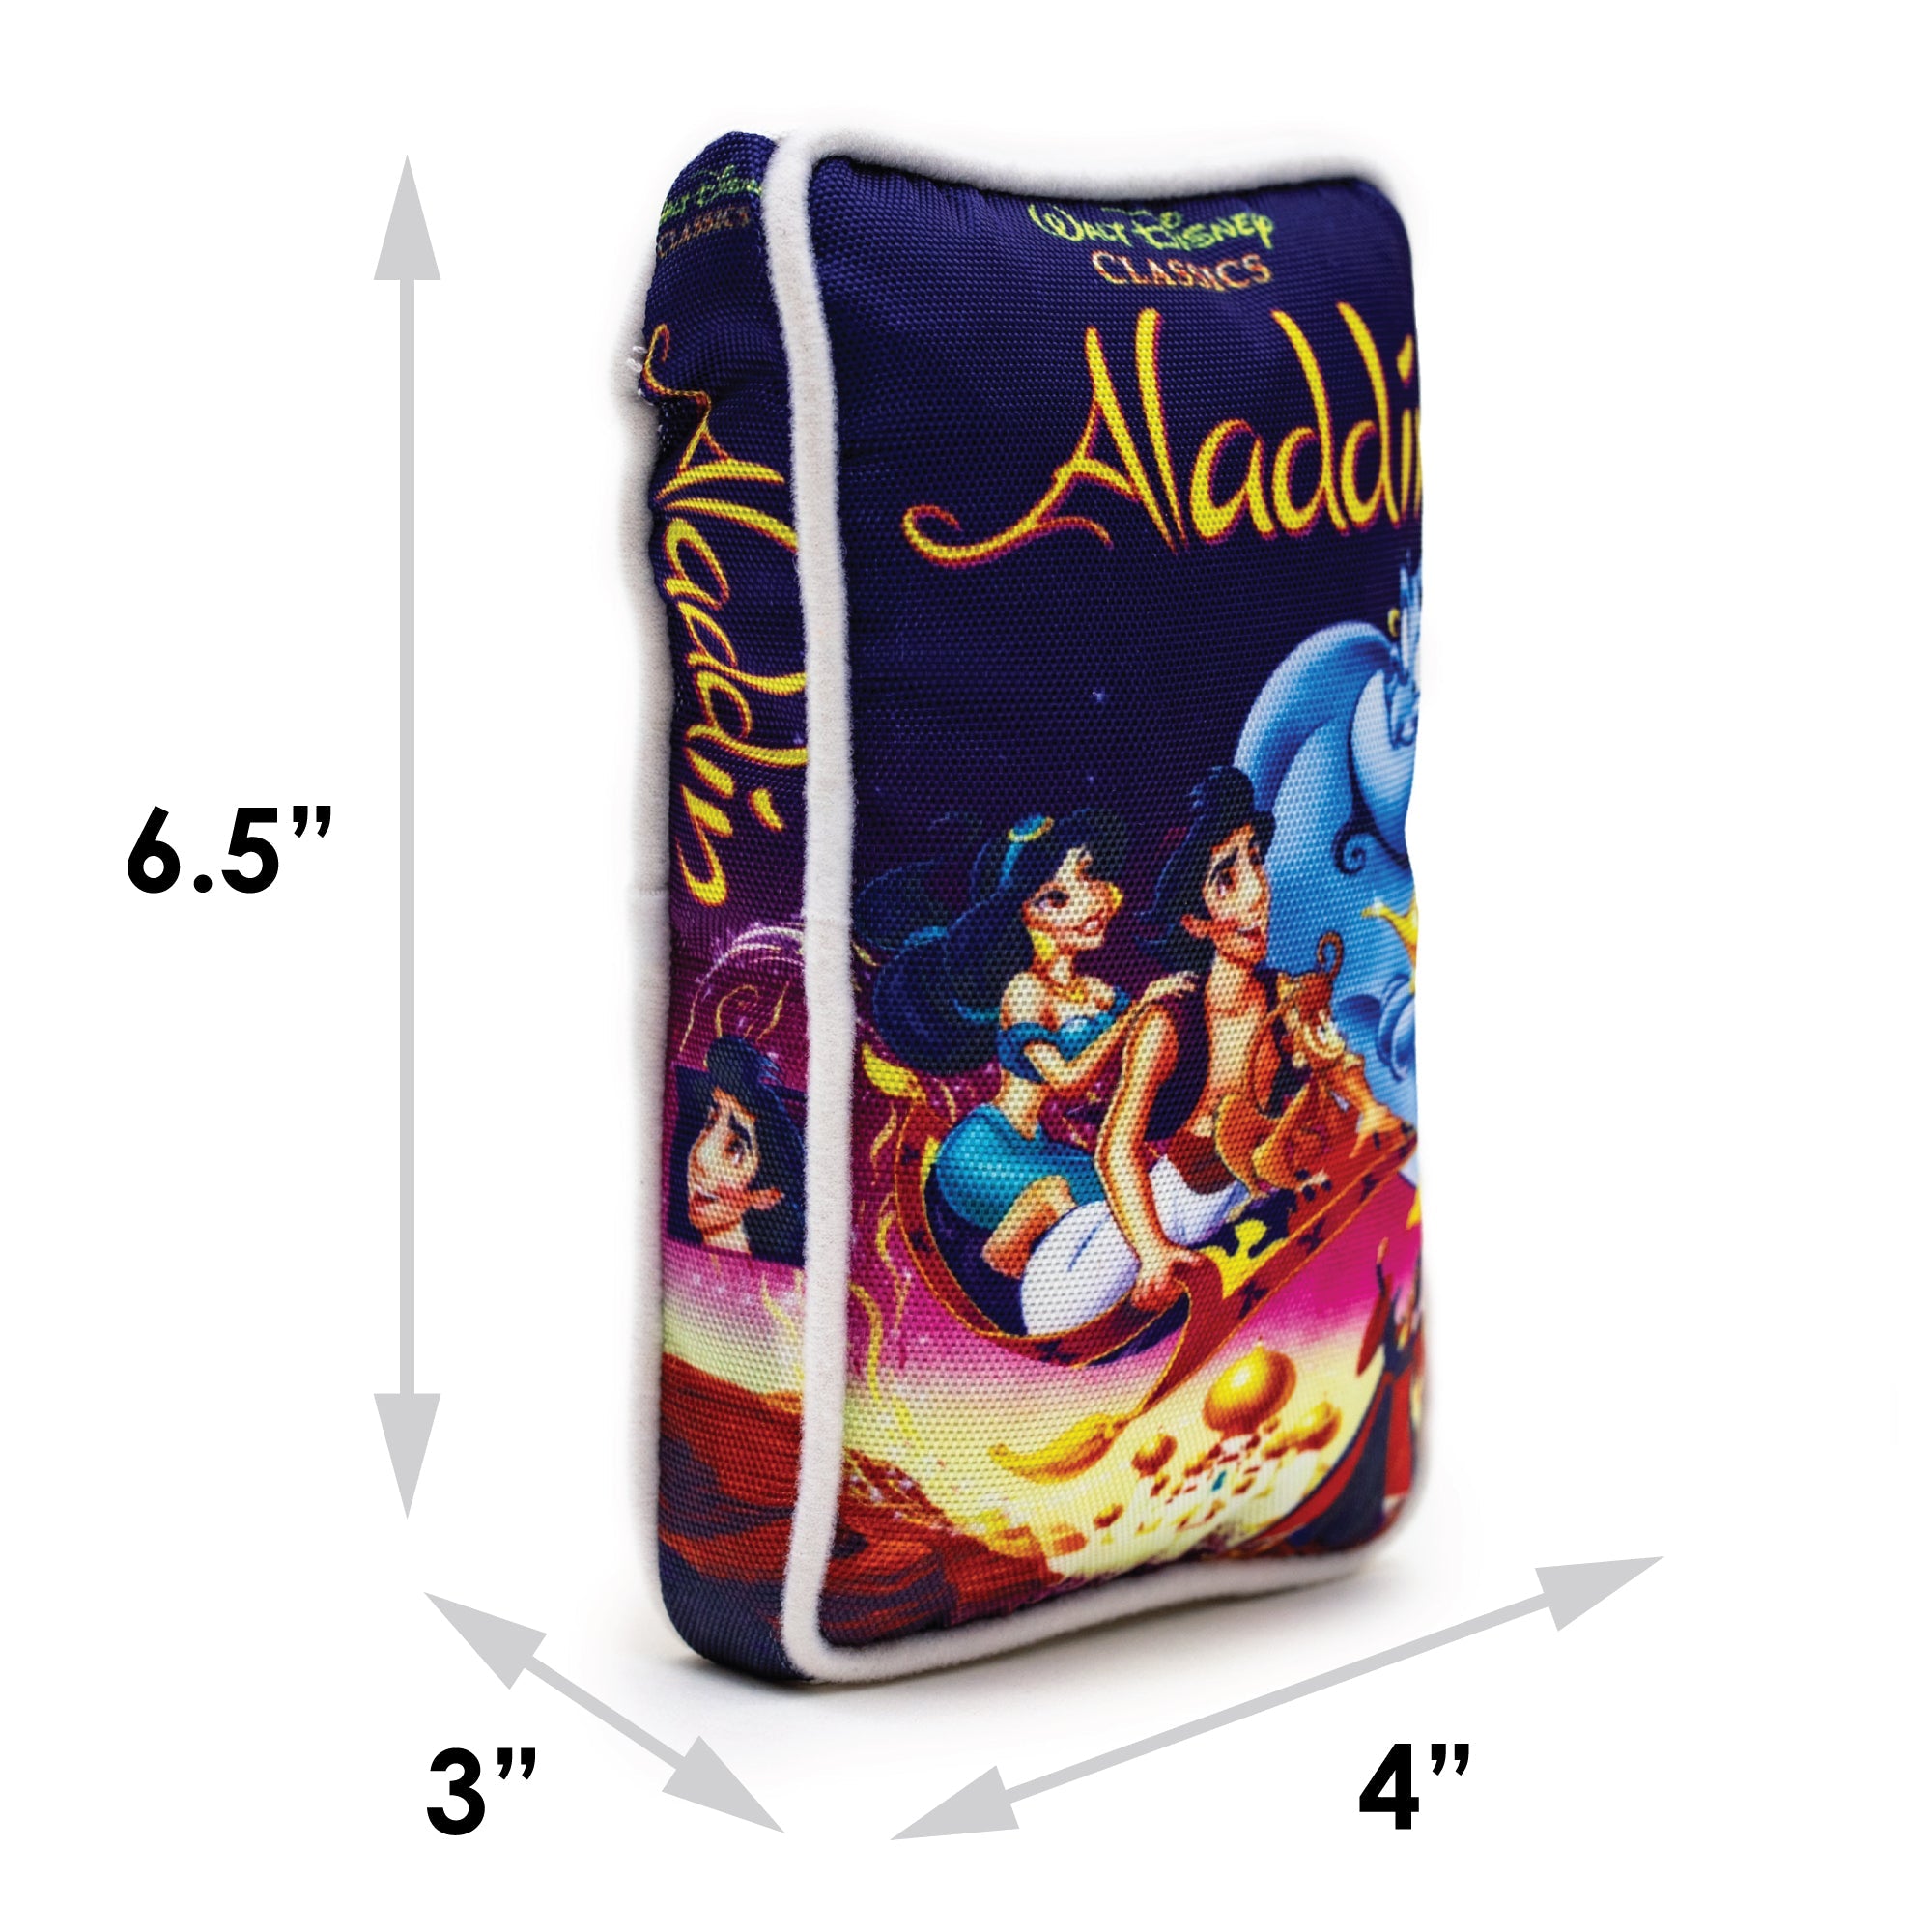 Disney Aladdin VHS Tape Replica Plush Squeaker Dog Toy